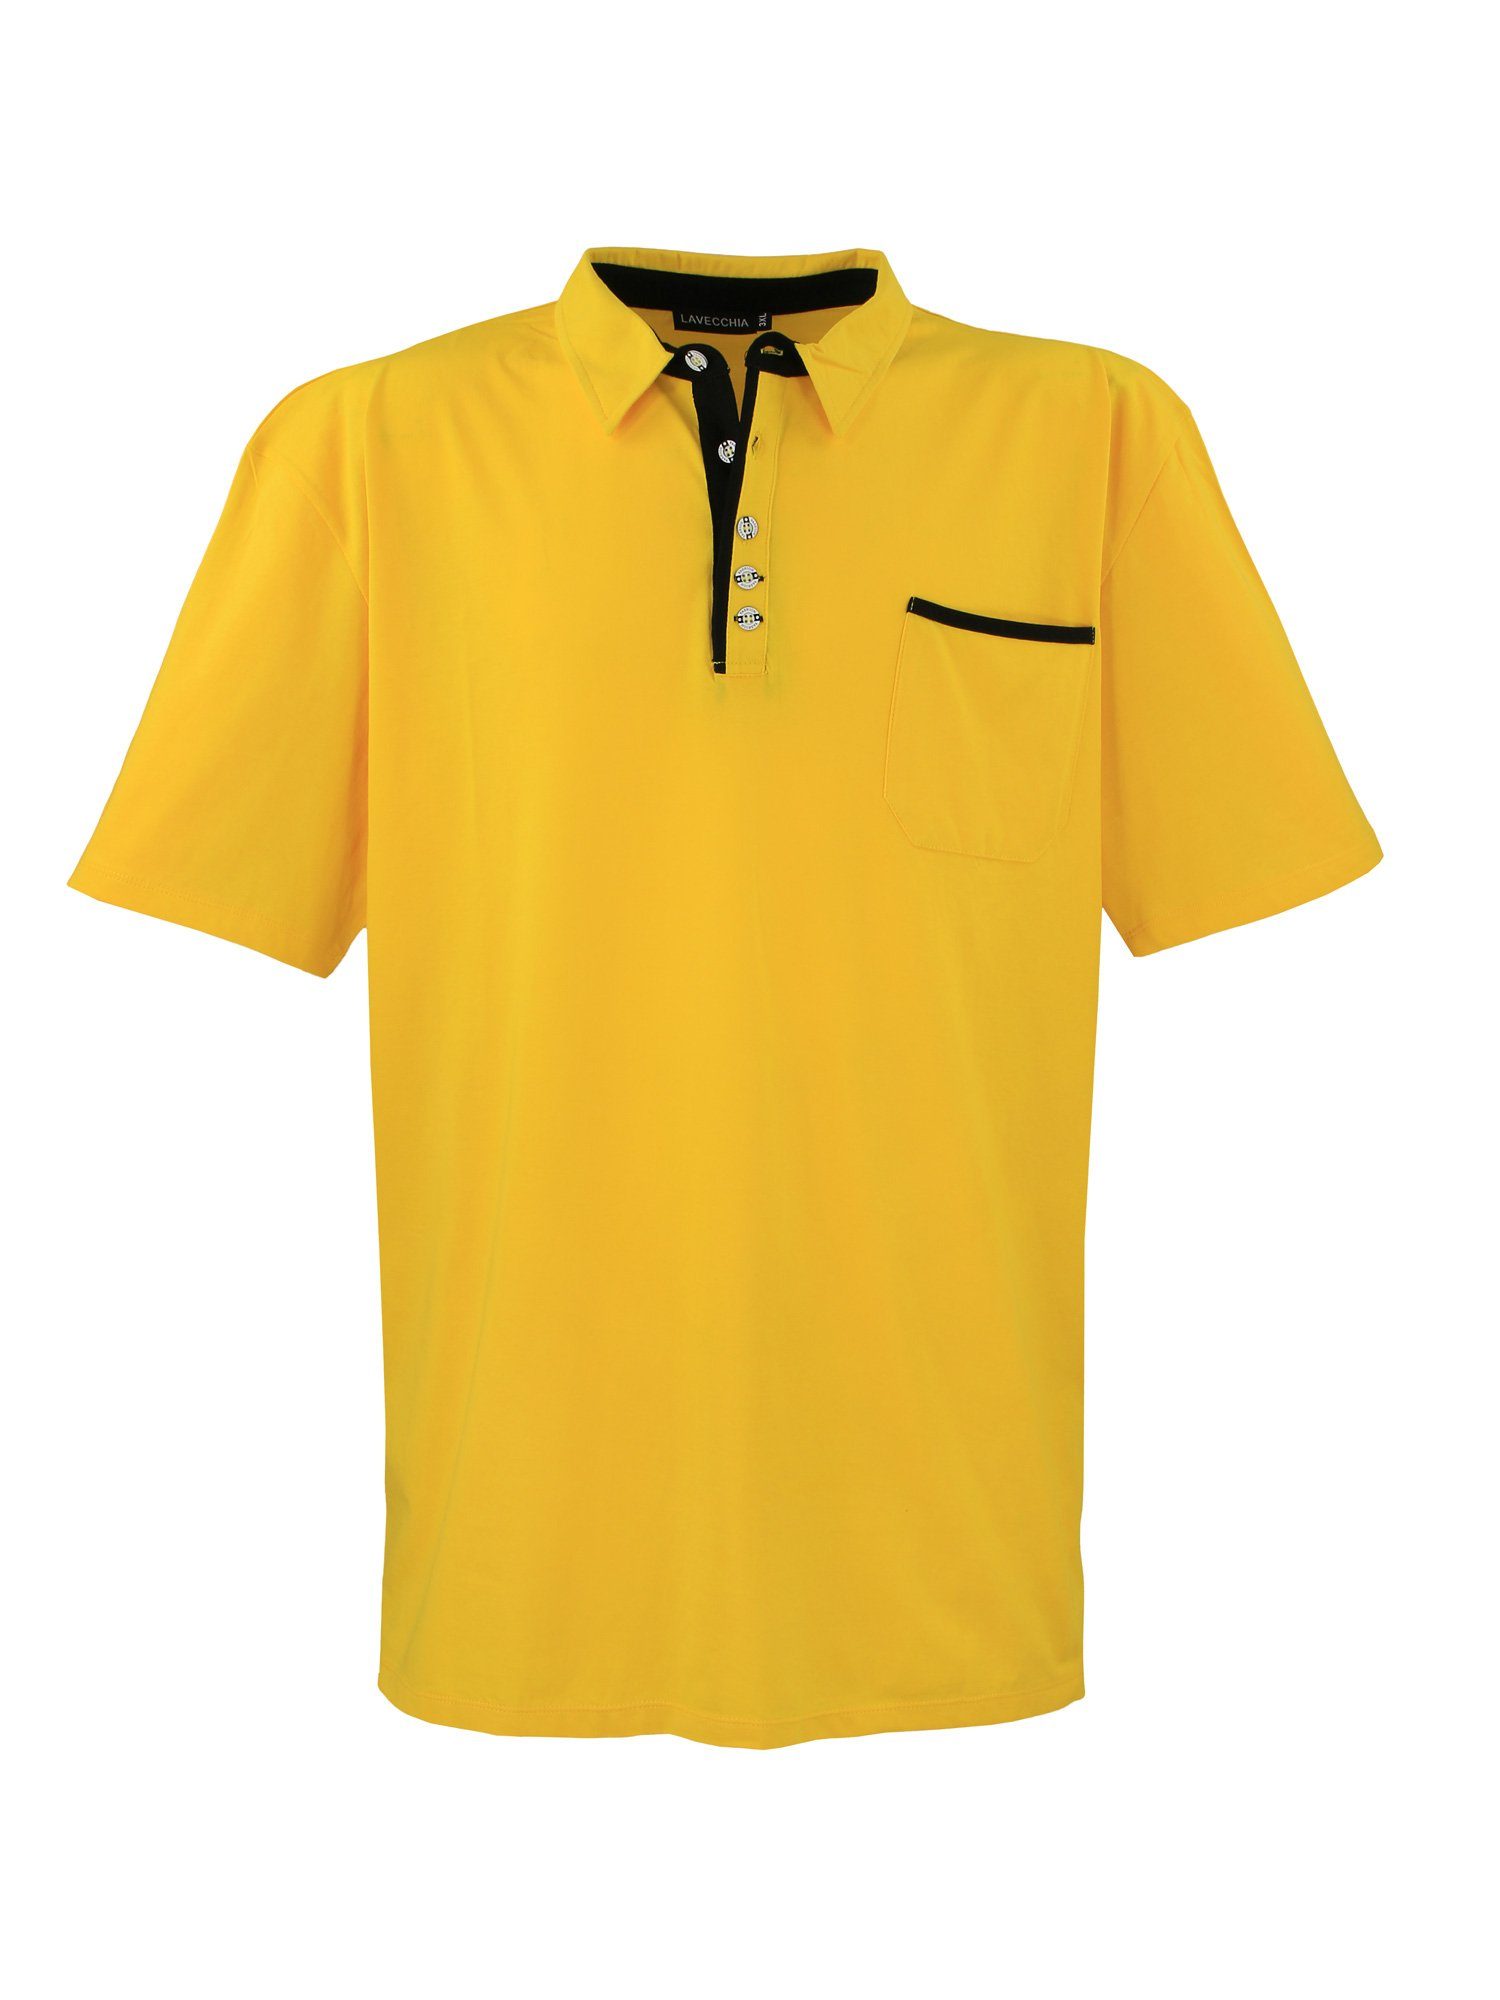 Polo Shirt Poloshirt Herren Lavecchia Shirt gelb LV-1701 Polo Übergrößen Herren